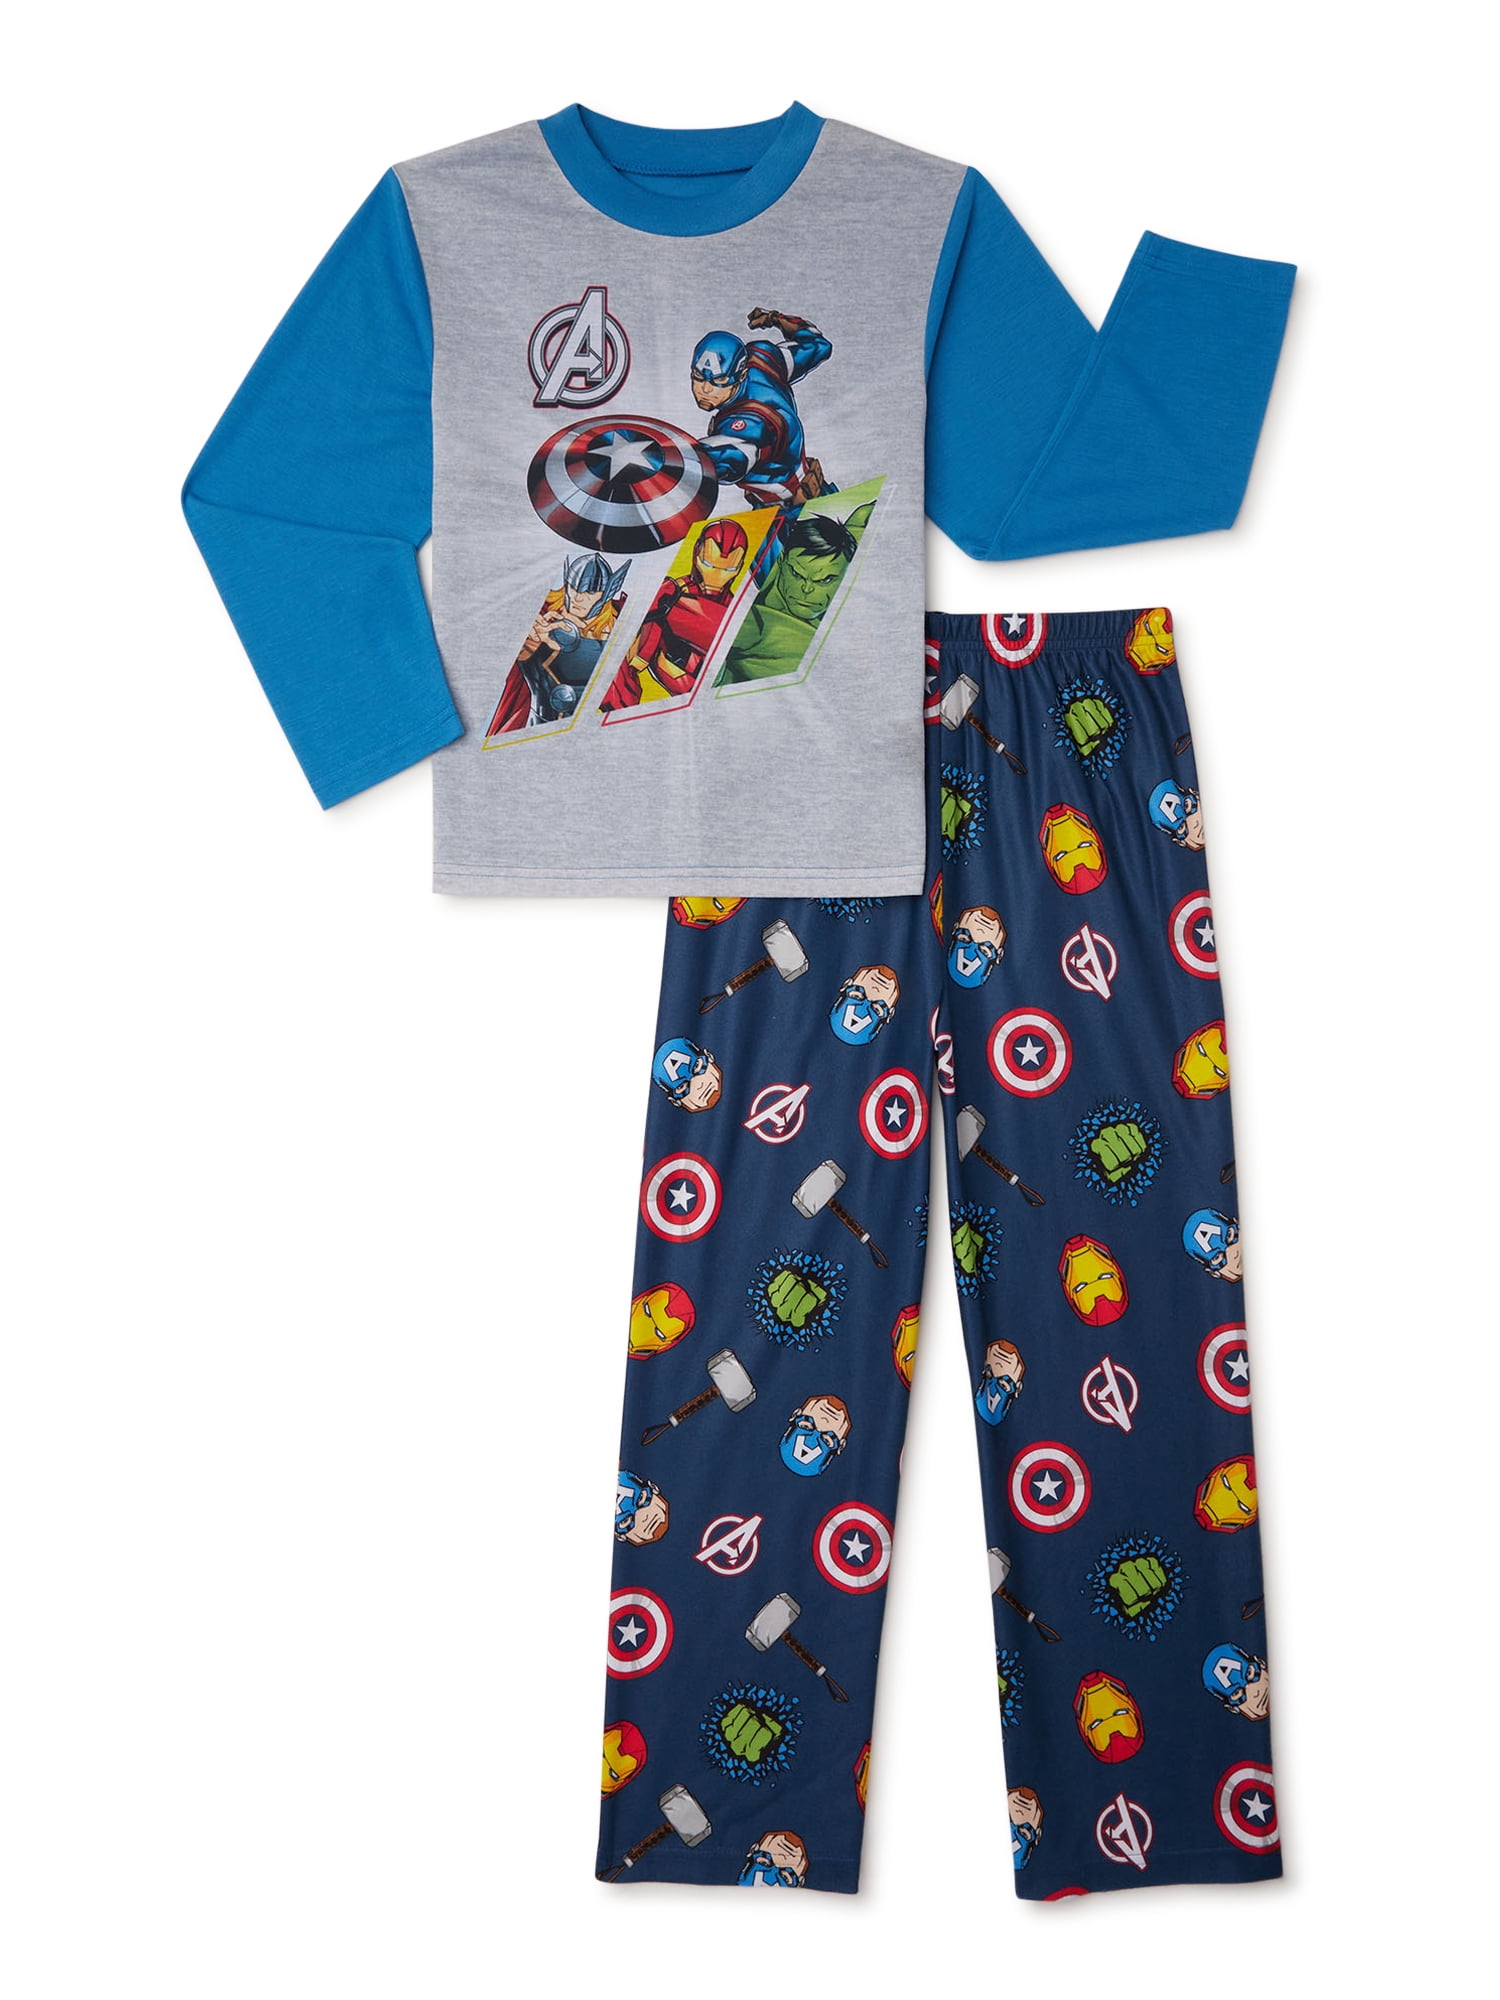 Guardians of the galaxy Boys' license 2 piece jersey pajama set Size 8 